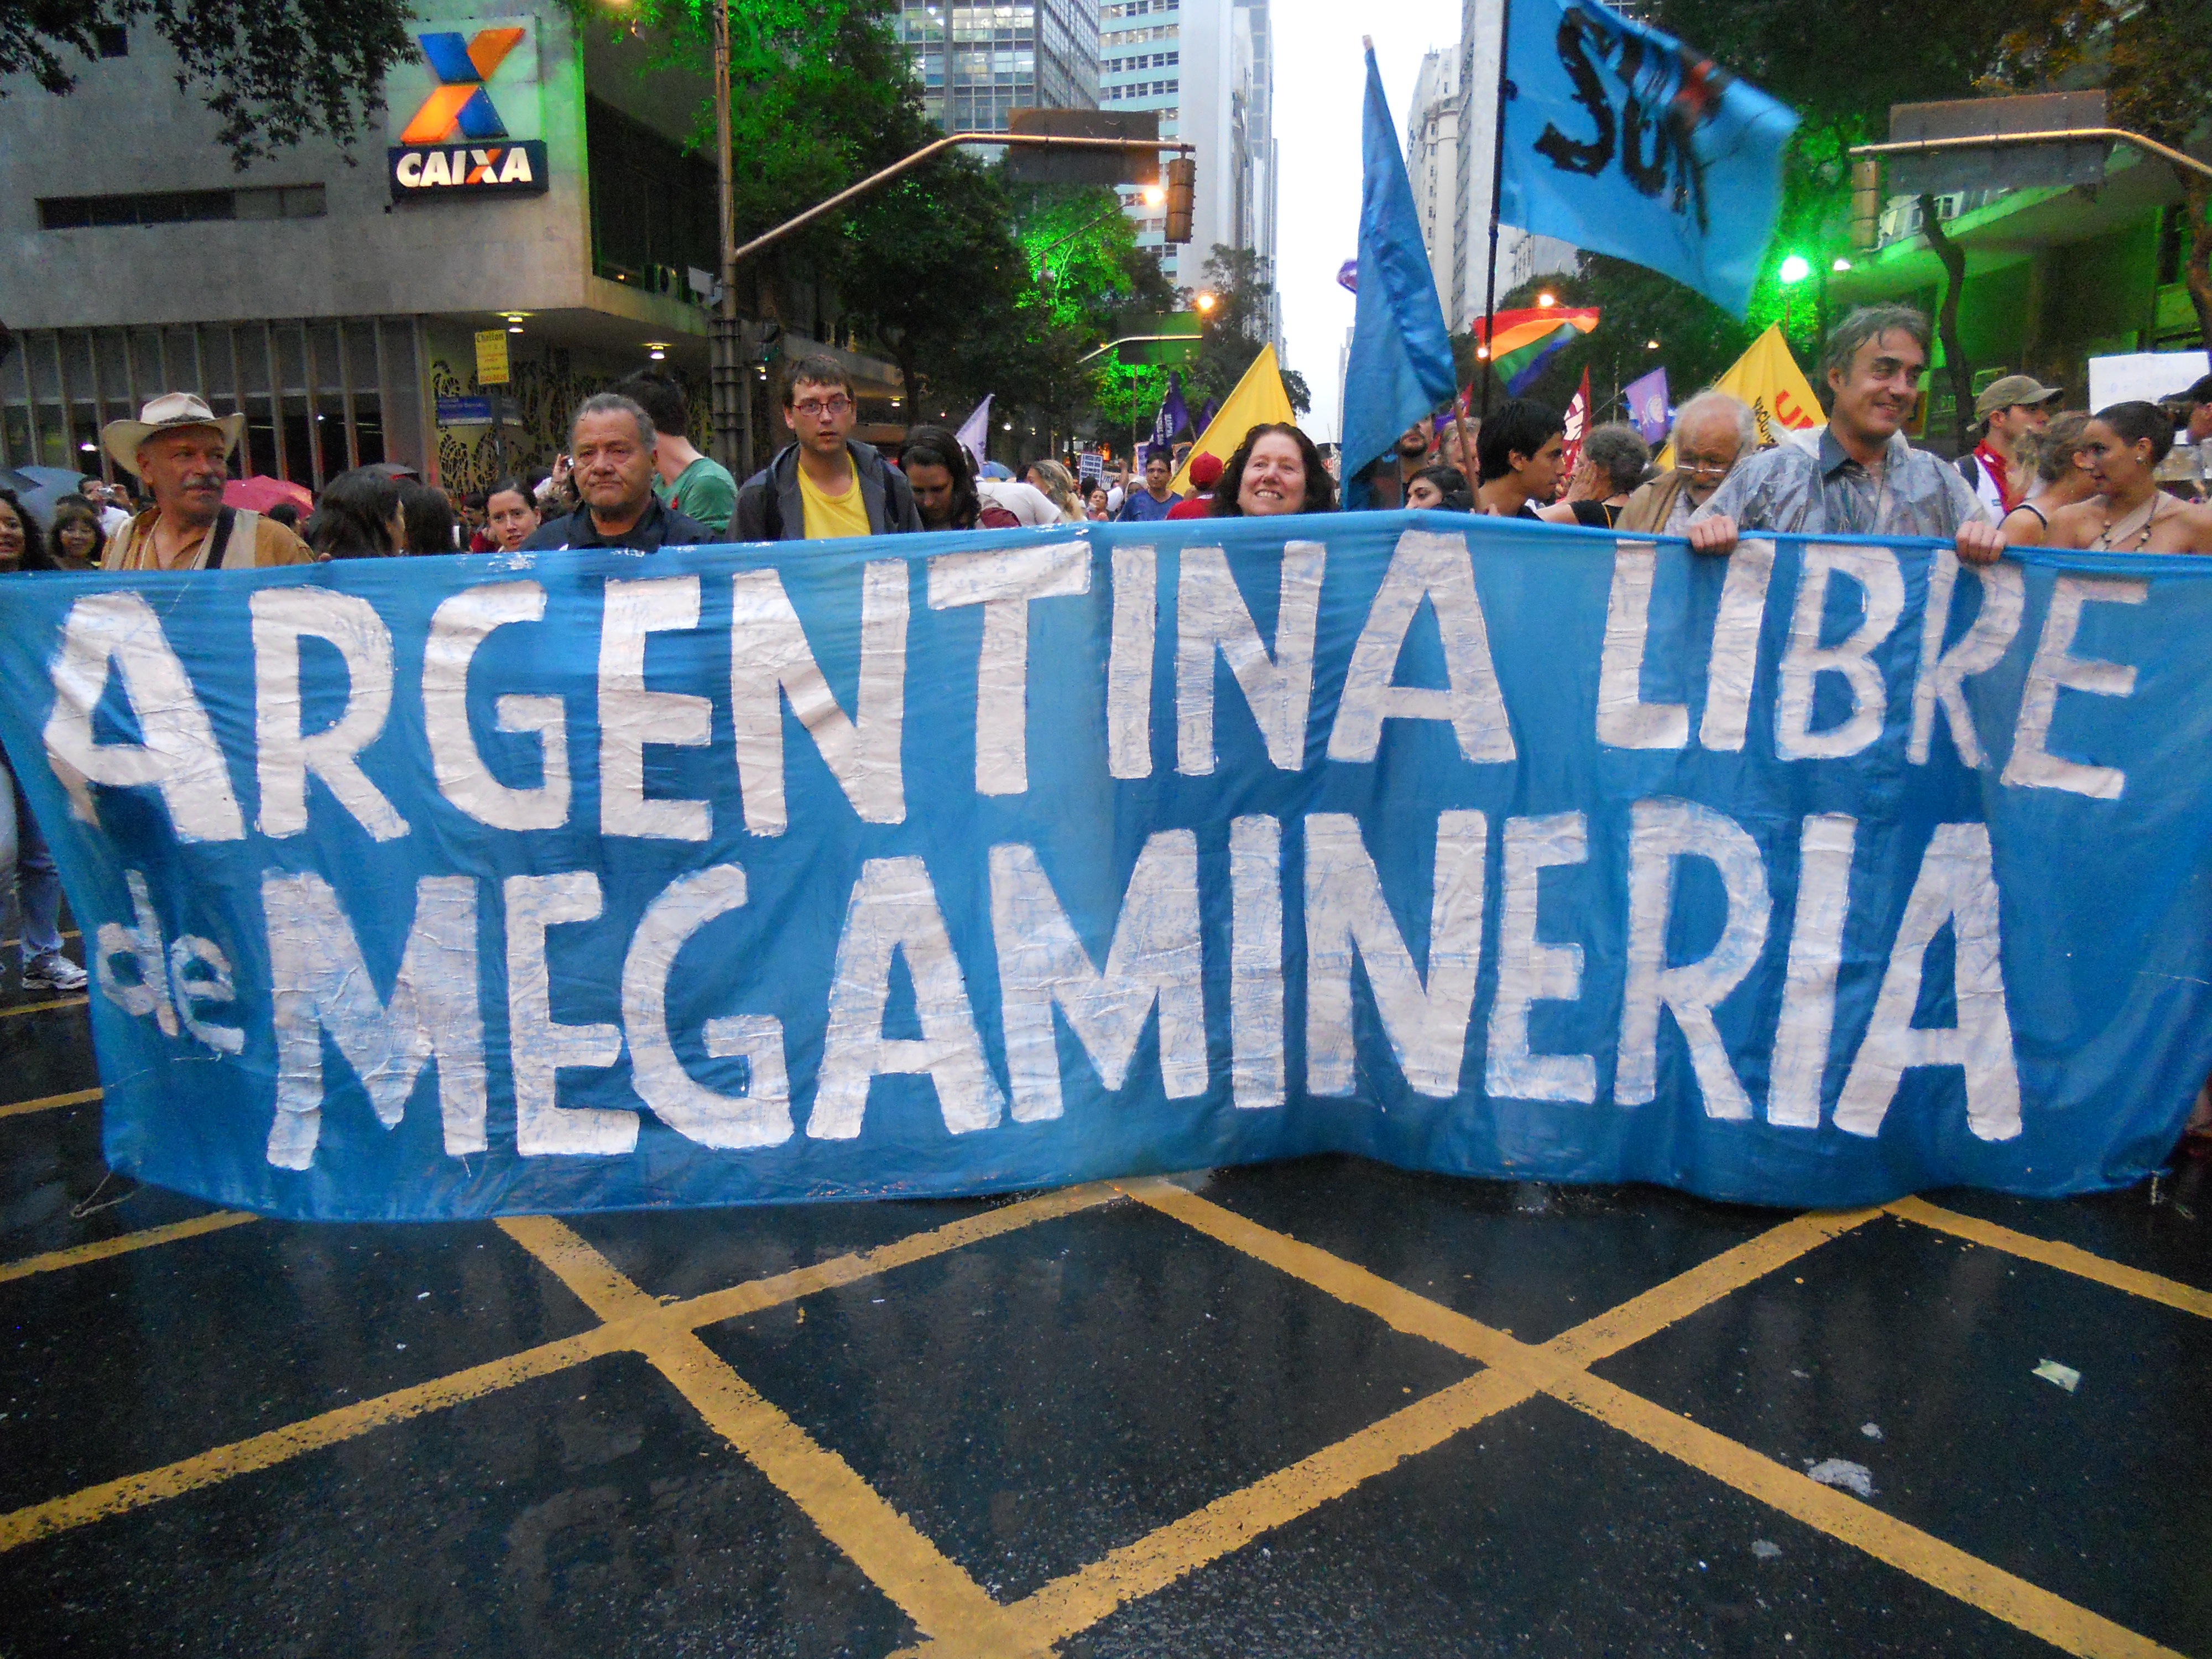 Argentina Free from Megamining